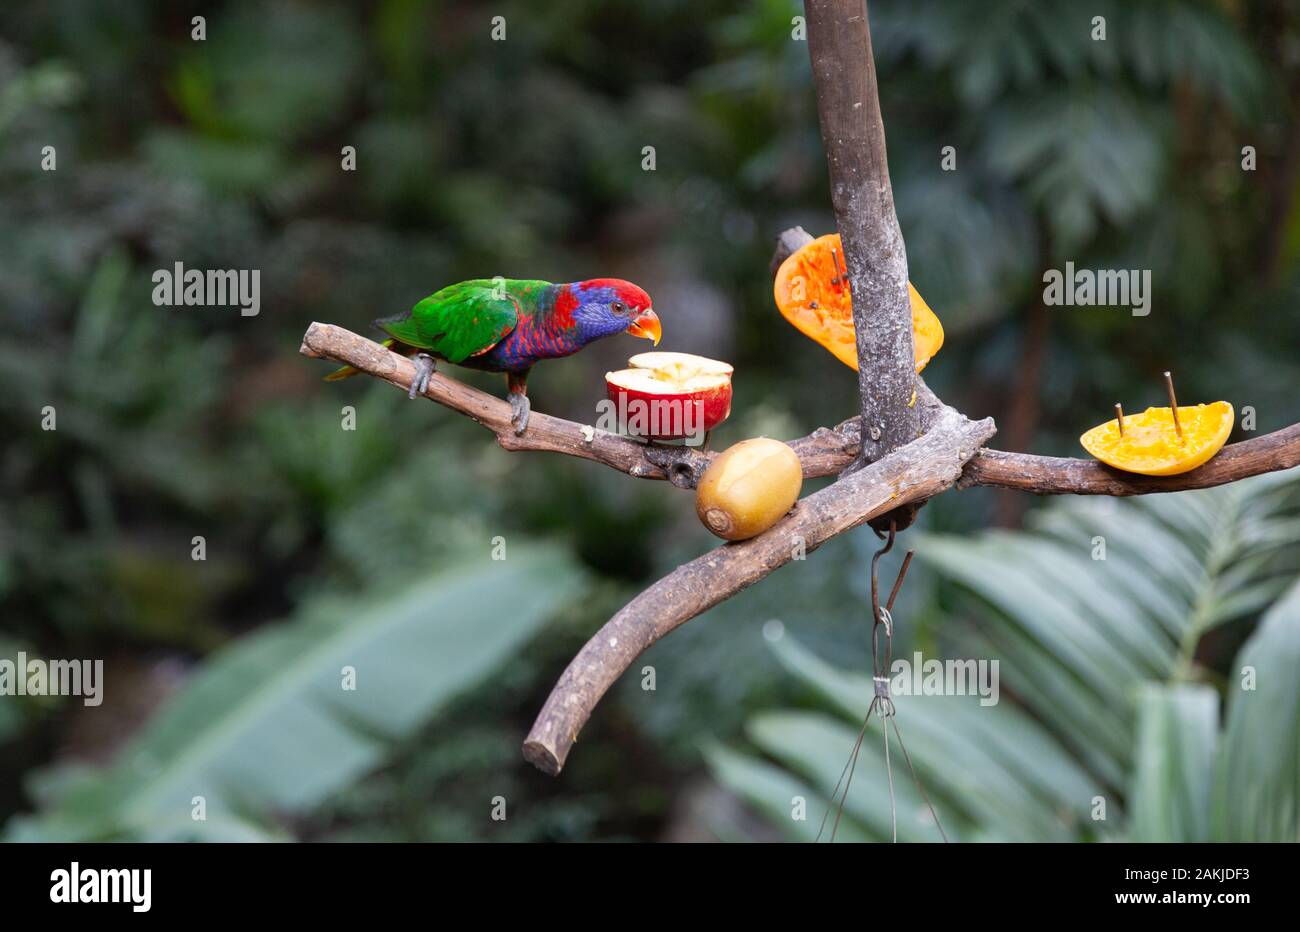 Hong Kong Park aviary; Rainbow Lorikeets ( Trichoglossus moluccanus ) feeding from a bird feeder, Hong Kong Asia Stock Photo